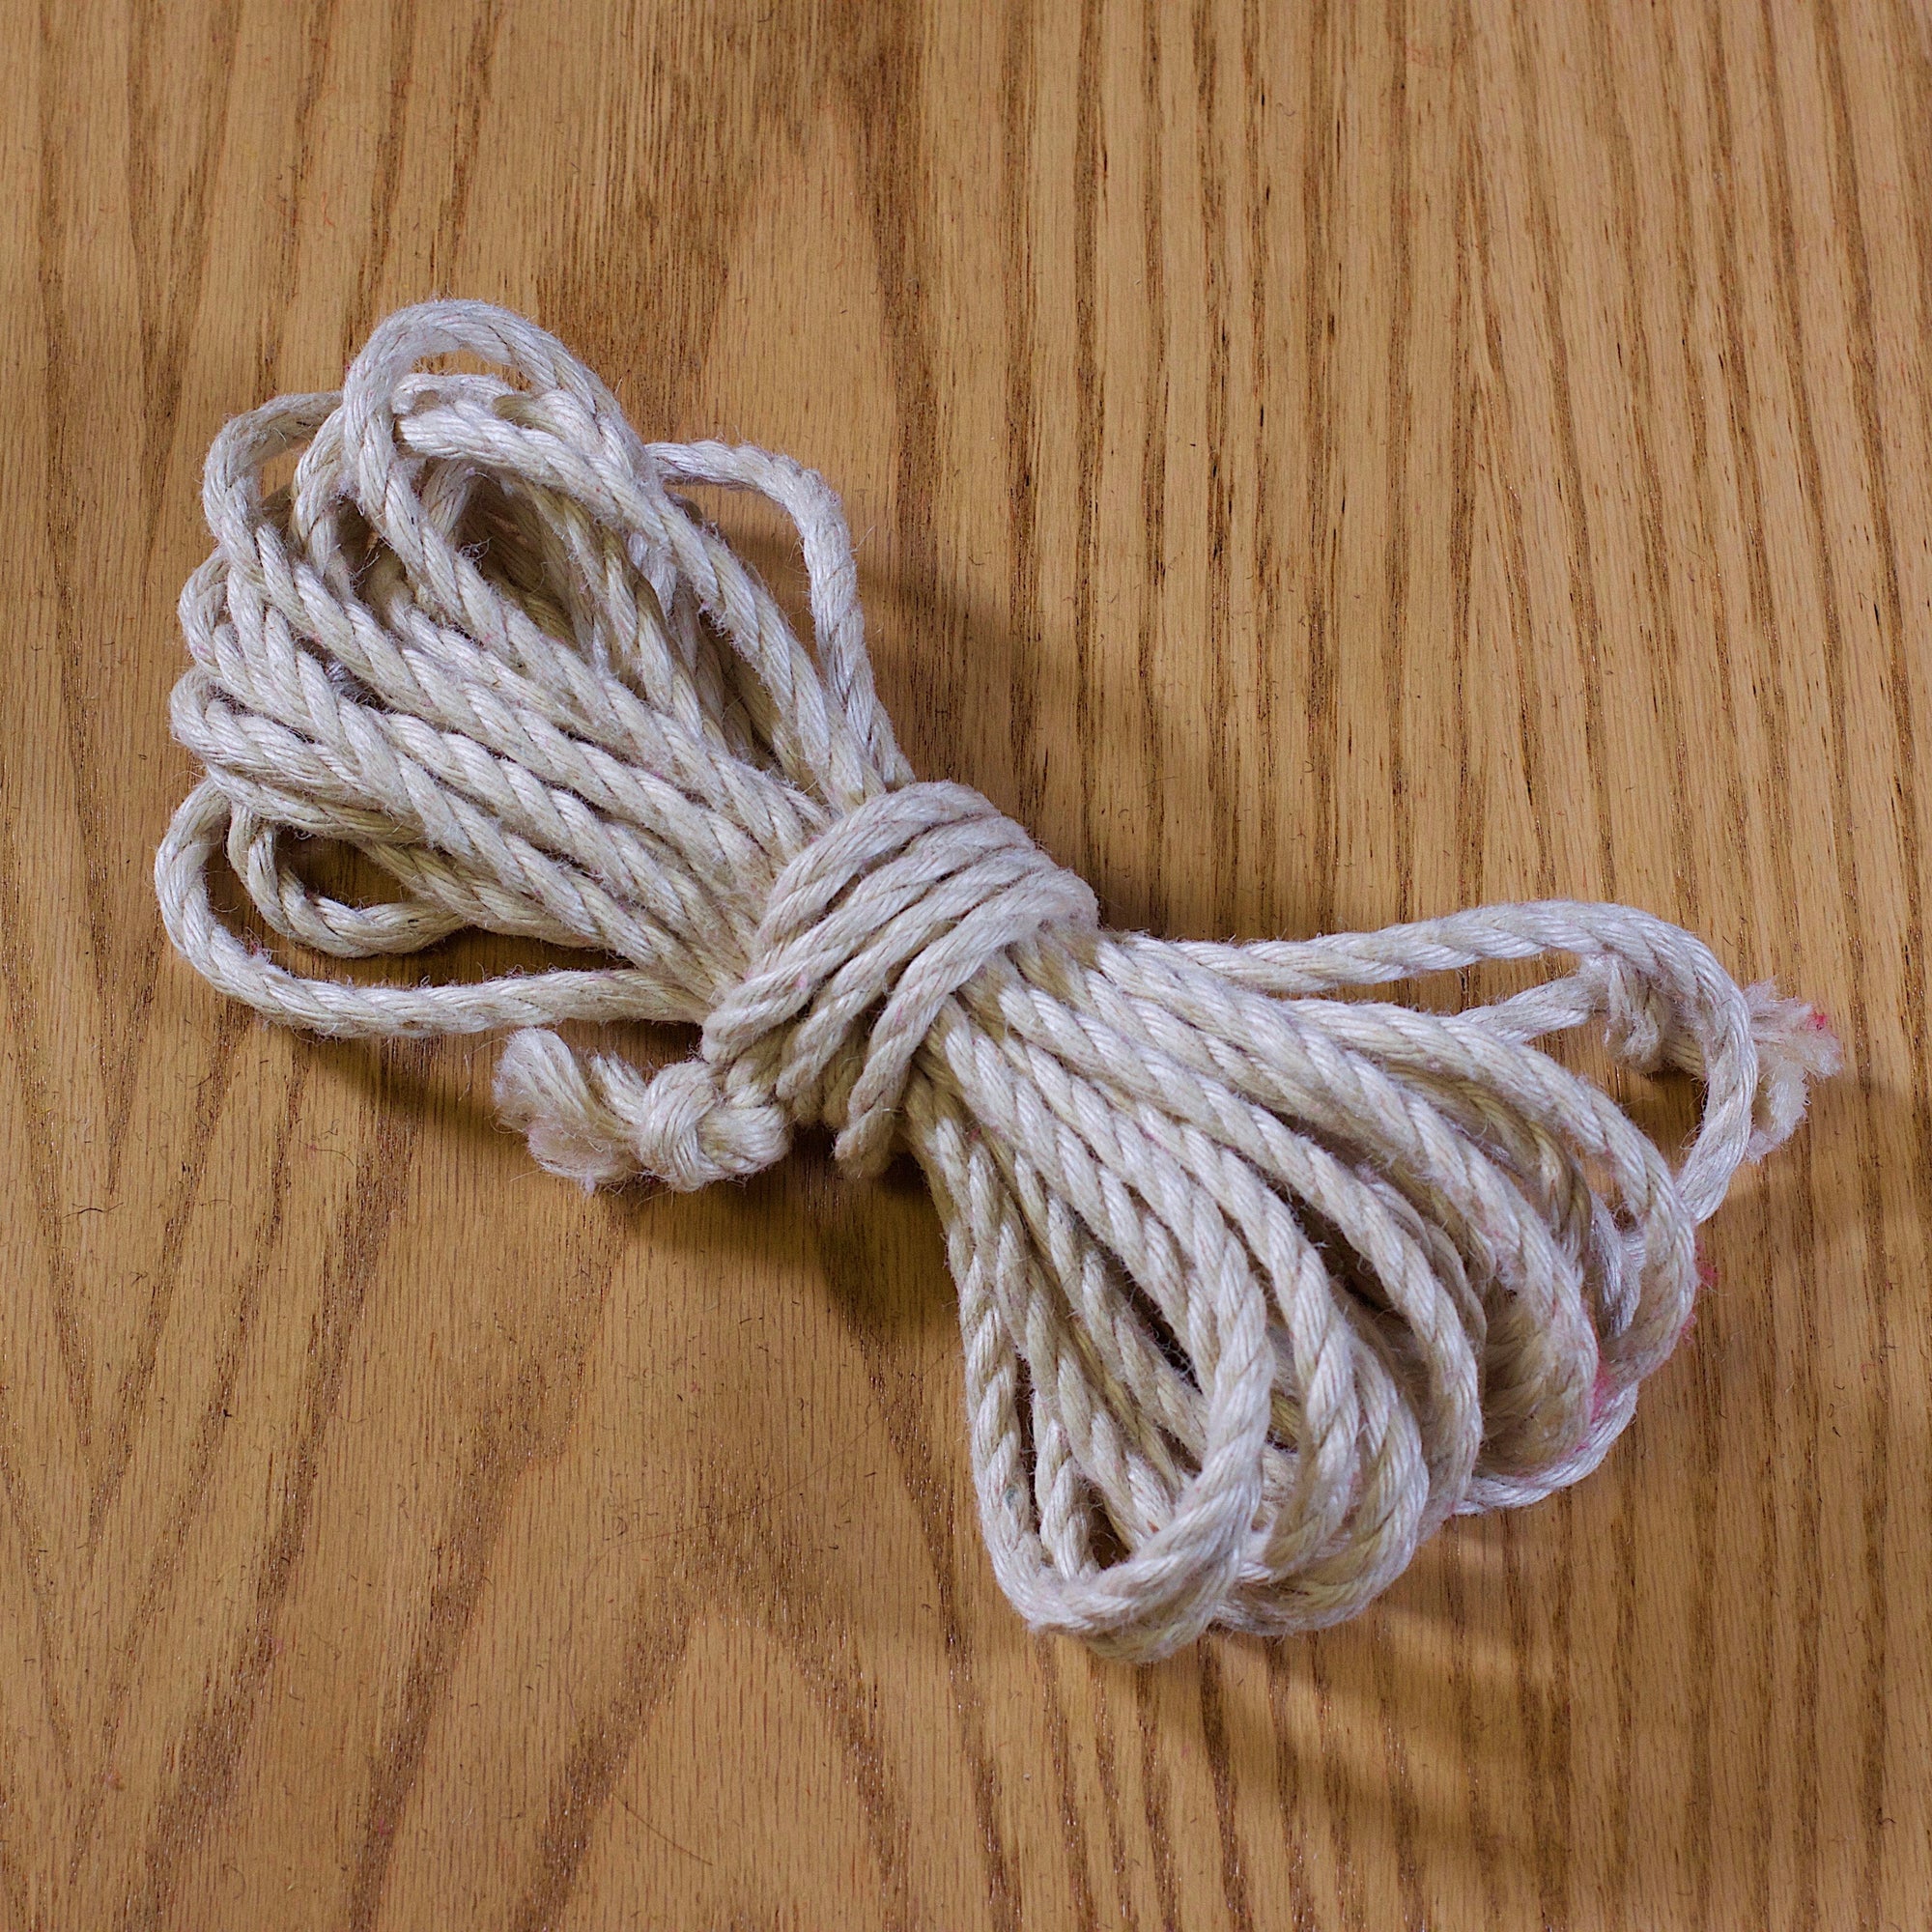 Jute rope Shibari quality by Tension - White